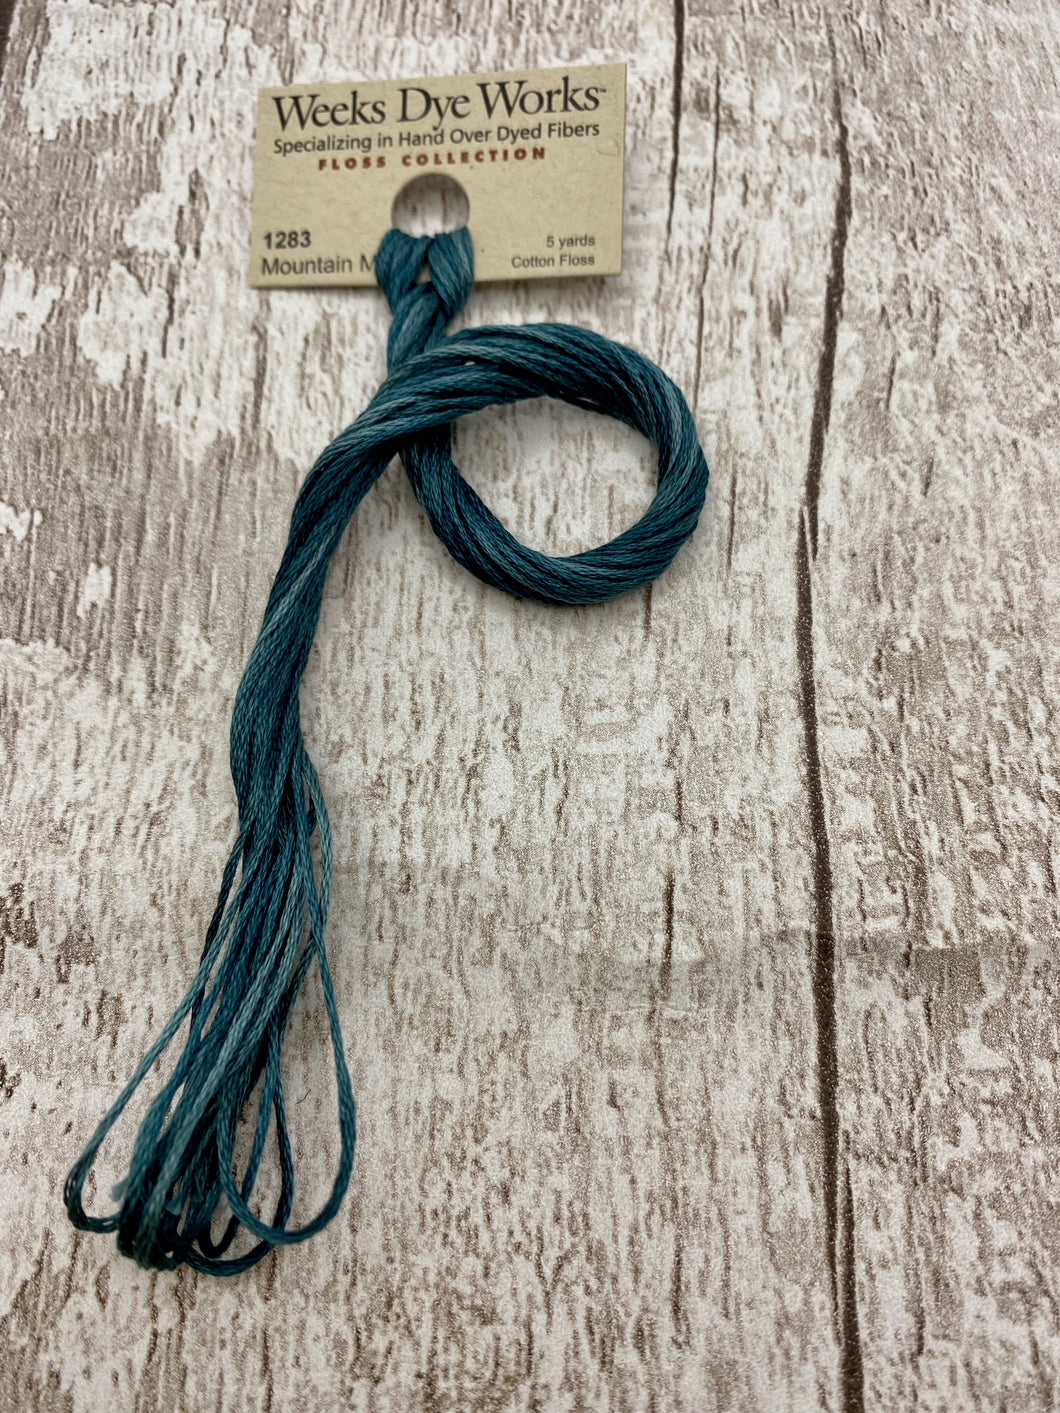 Mountain Mist (#1283) Weeks Dye Works, 6-strand cotton floss